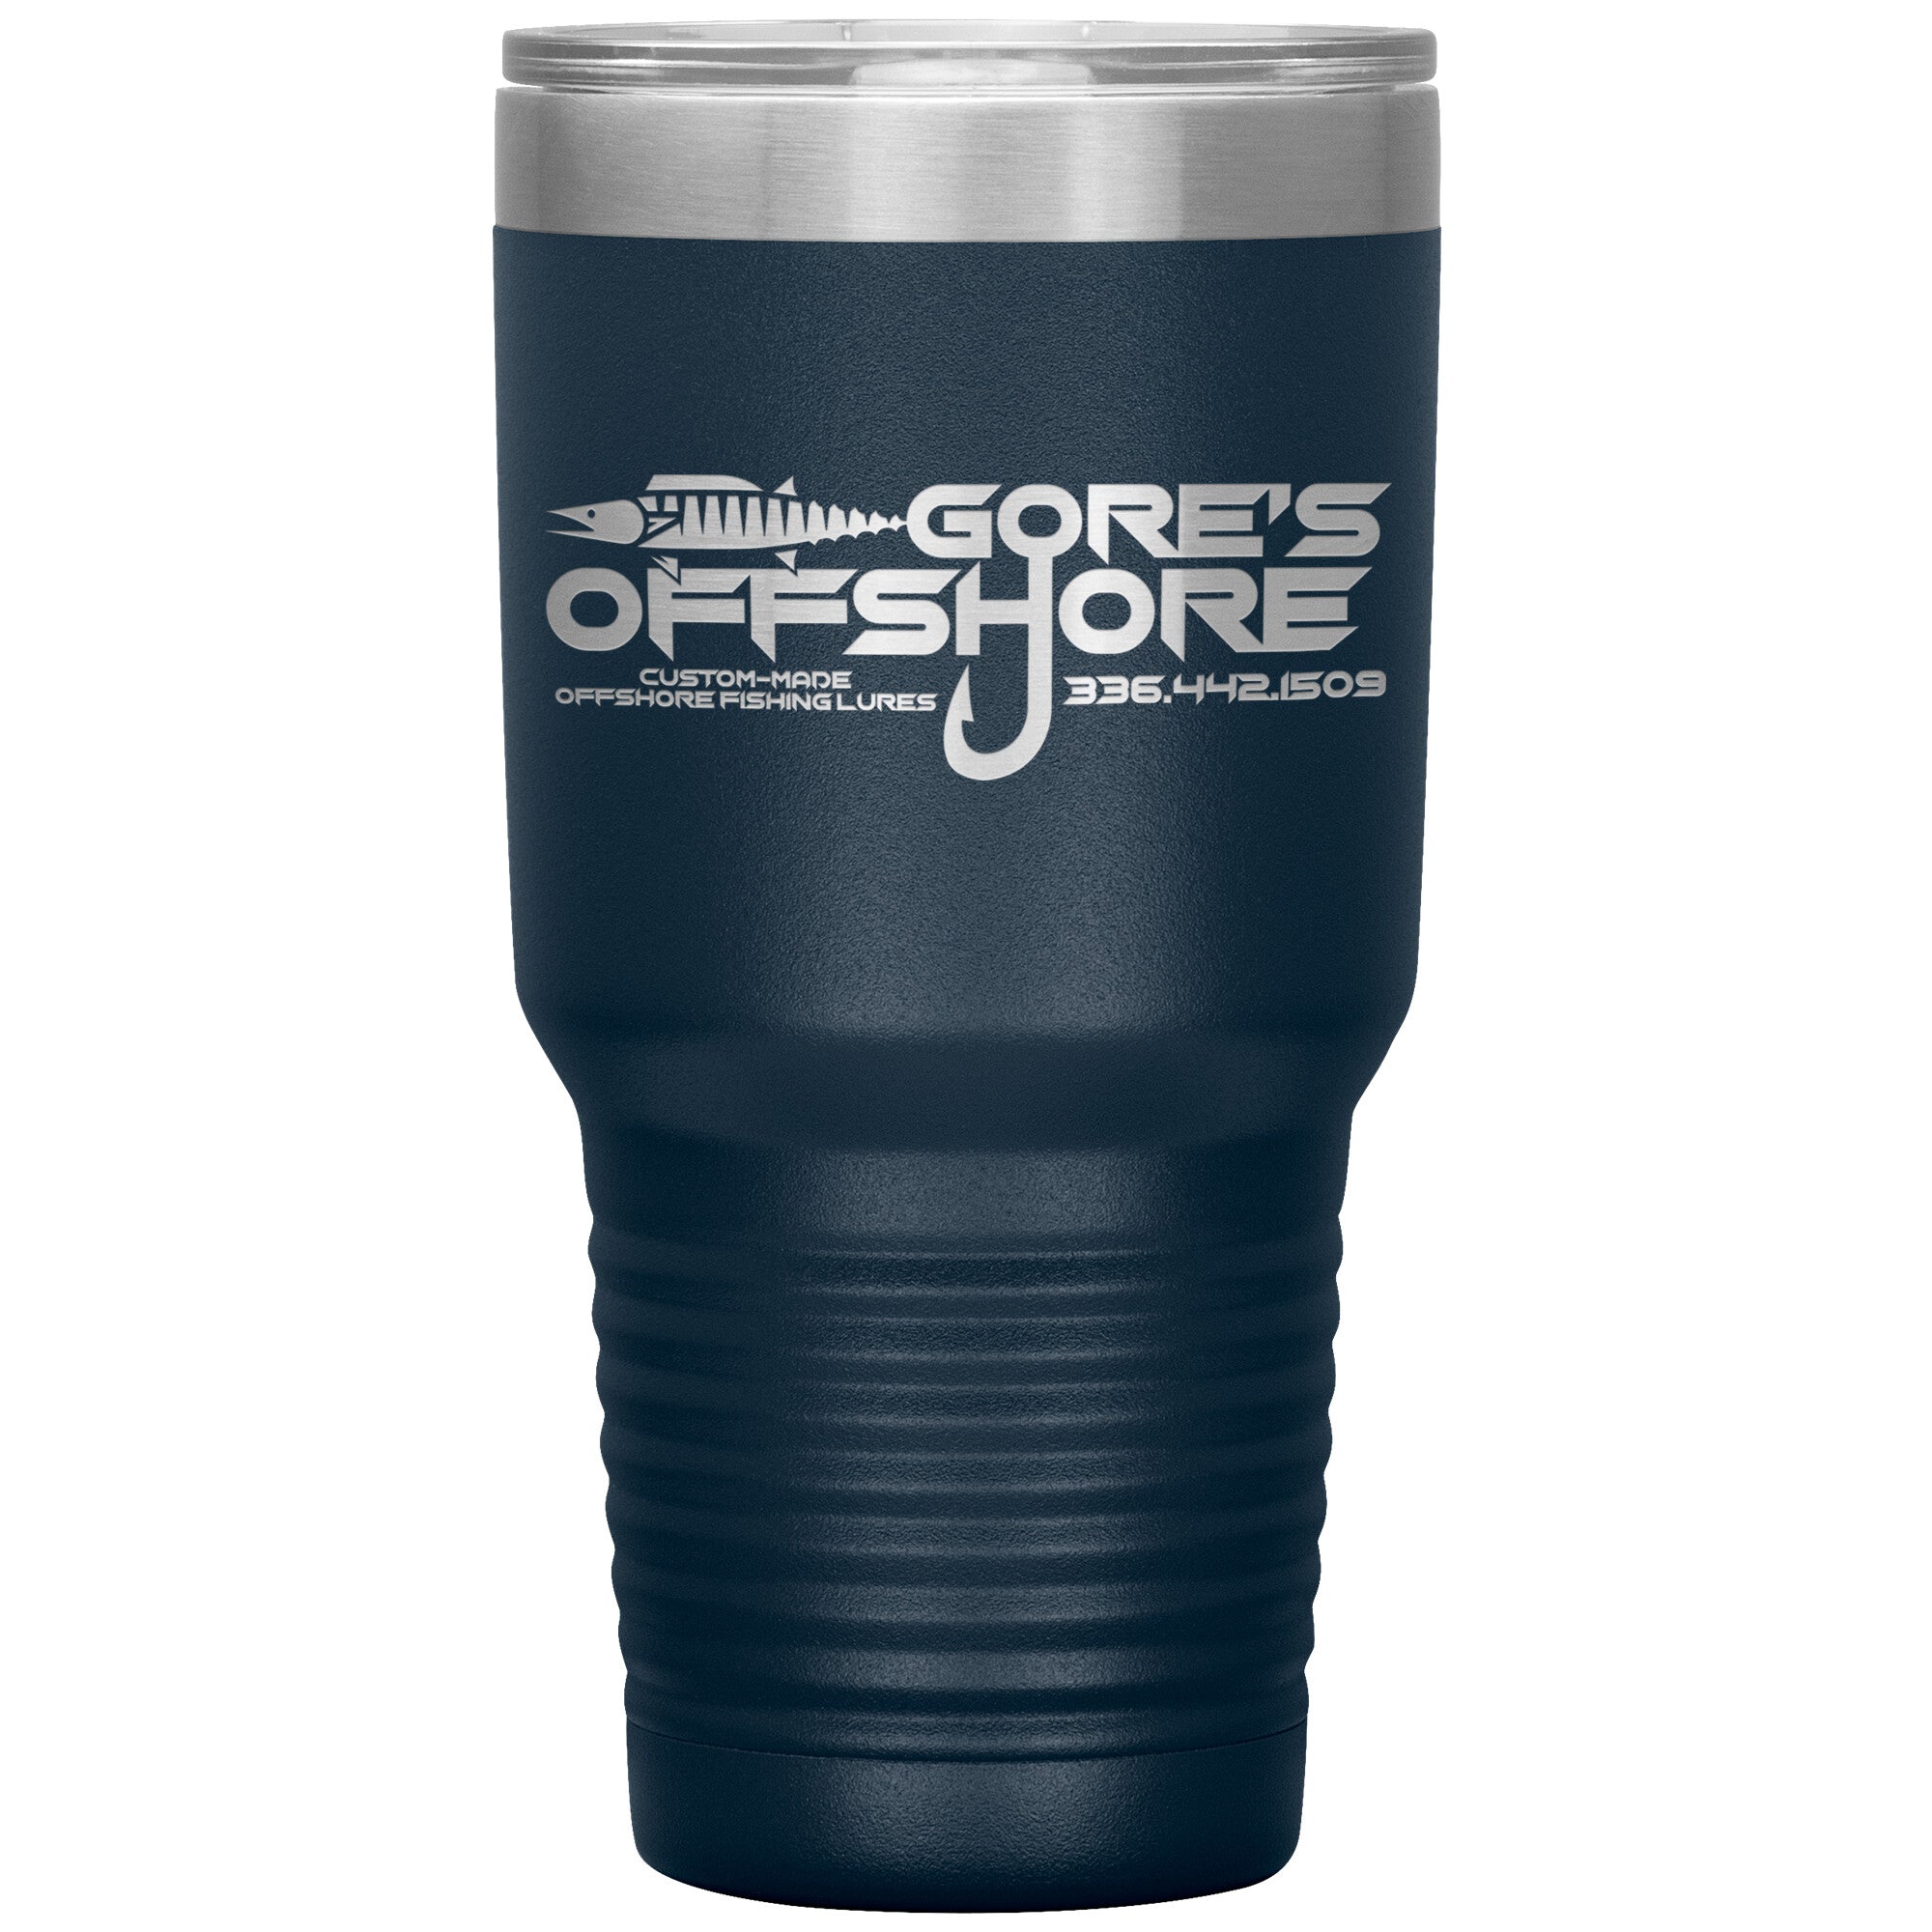 Gore's Offshore